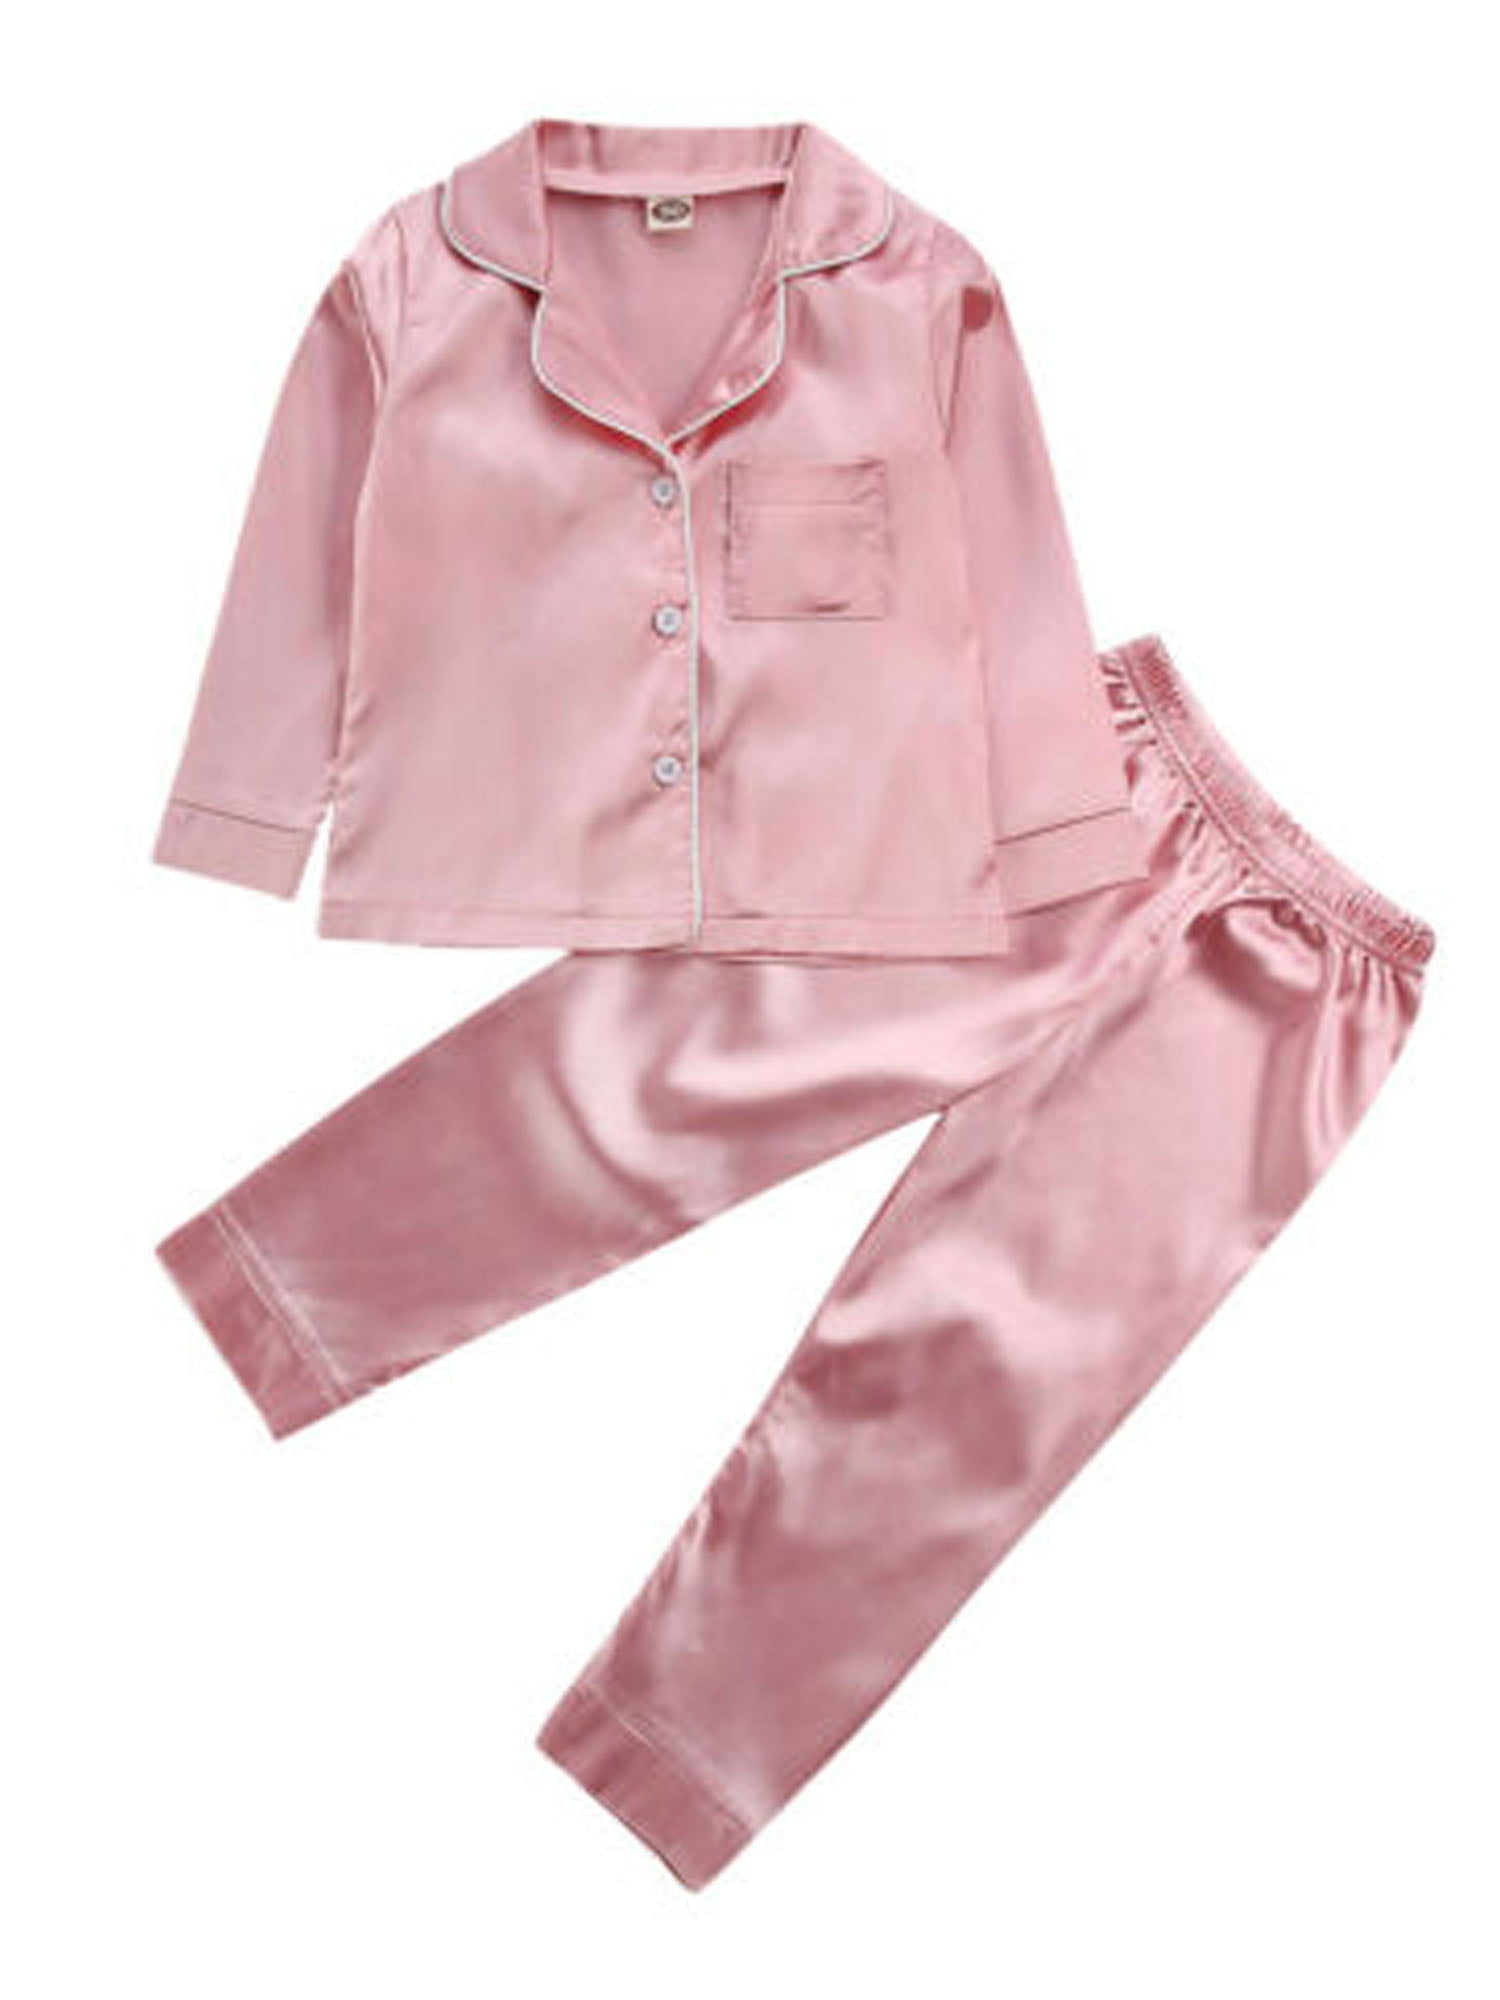 Pajamas Kid Unisex Pjs Set Girls Boys Silk Pajamas Set Satin Long Sleeve 2 Piece Clasic Sleepwear for 2-12 Years Todder 